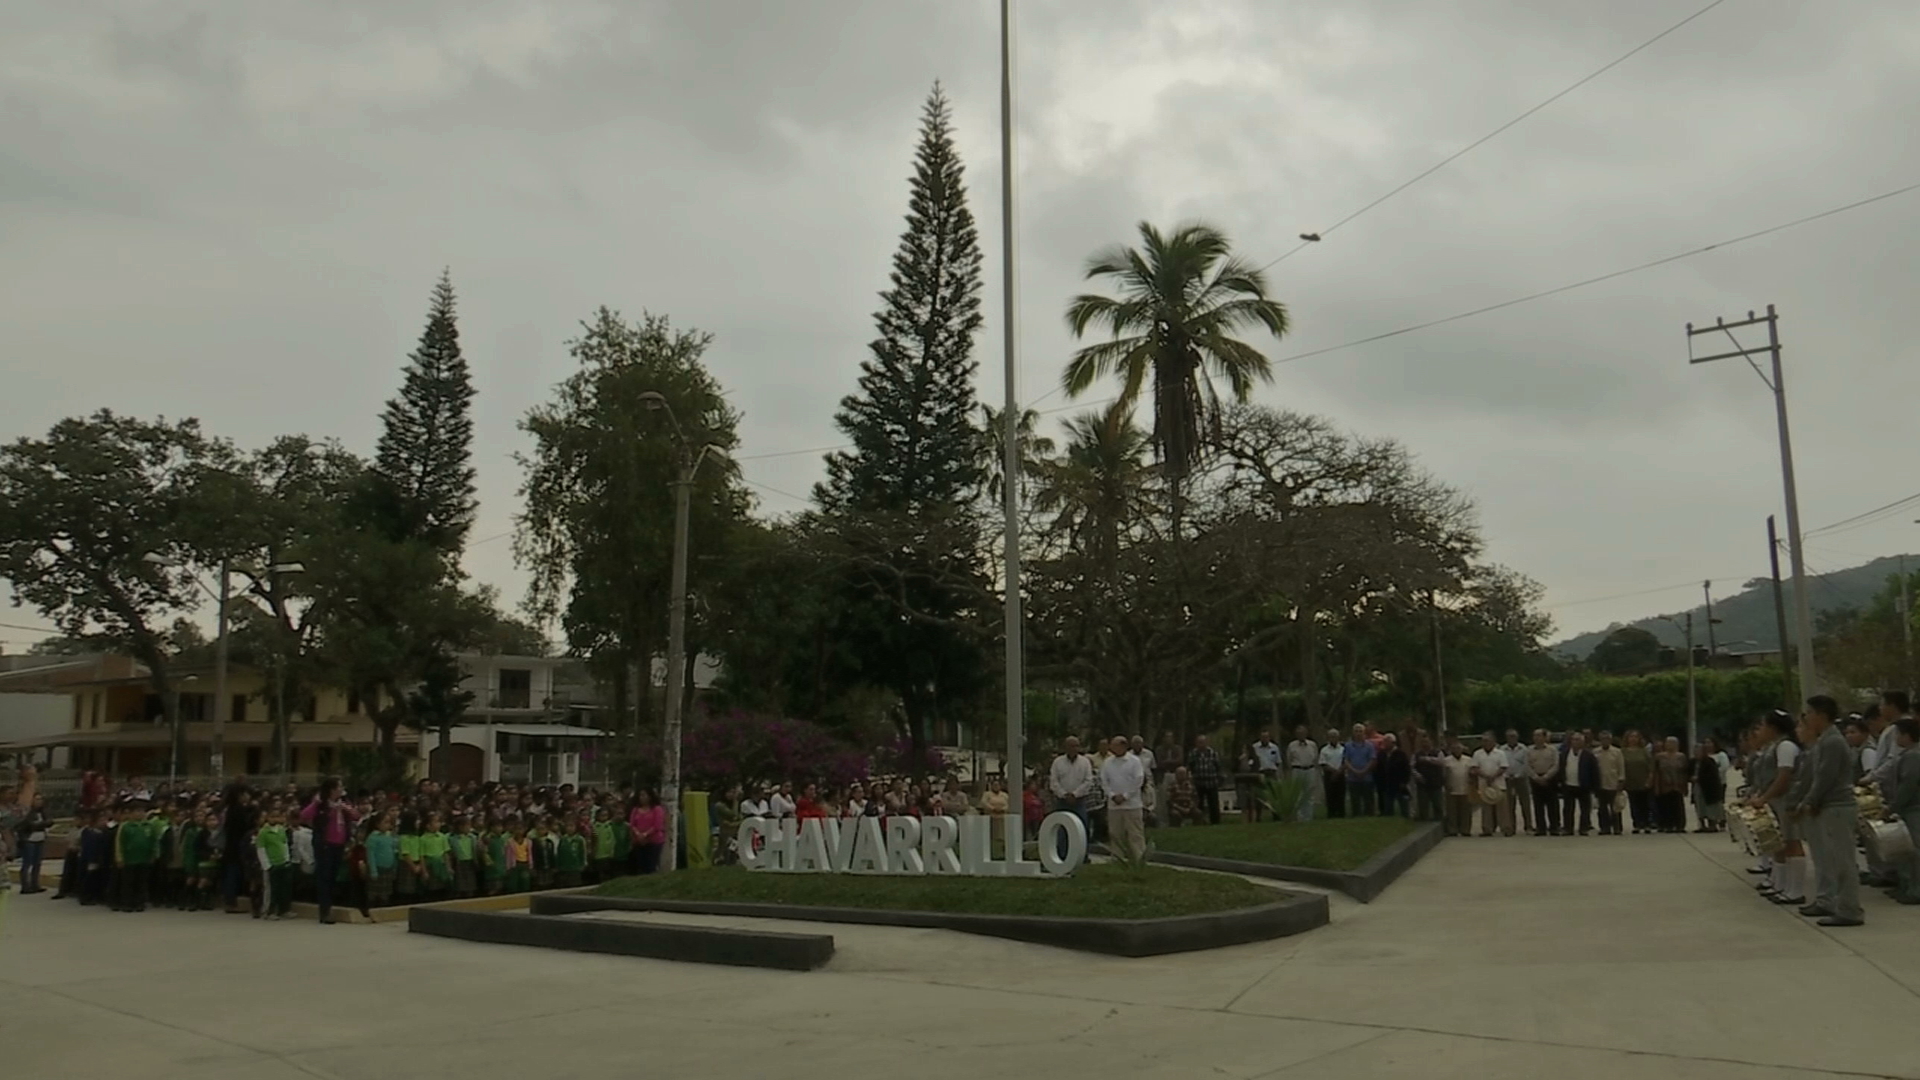 Inauguran Plaza Cívica en Chavarrillo